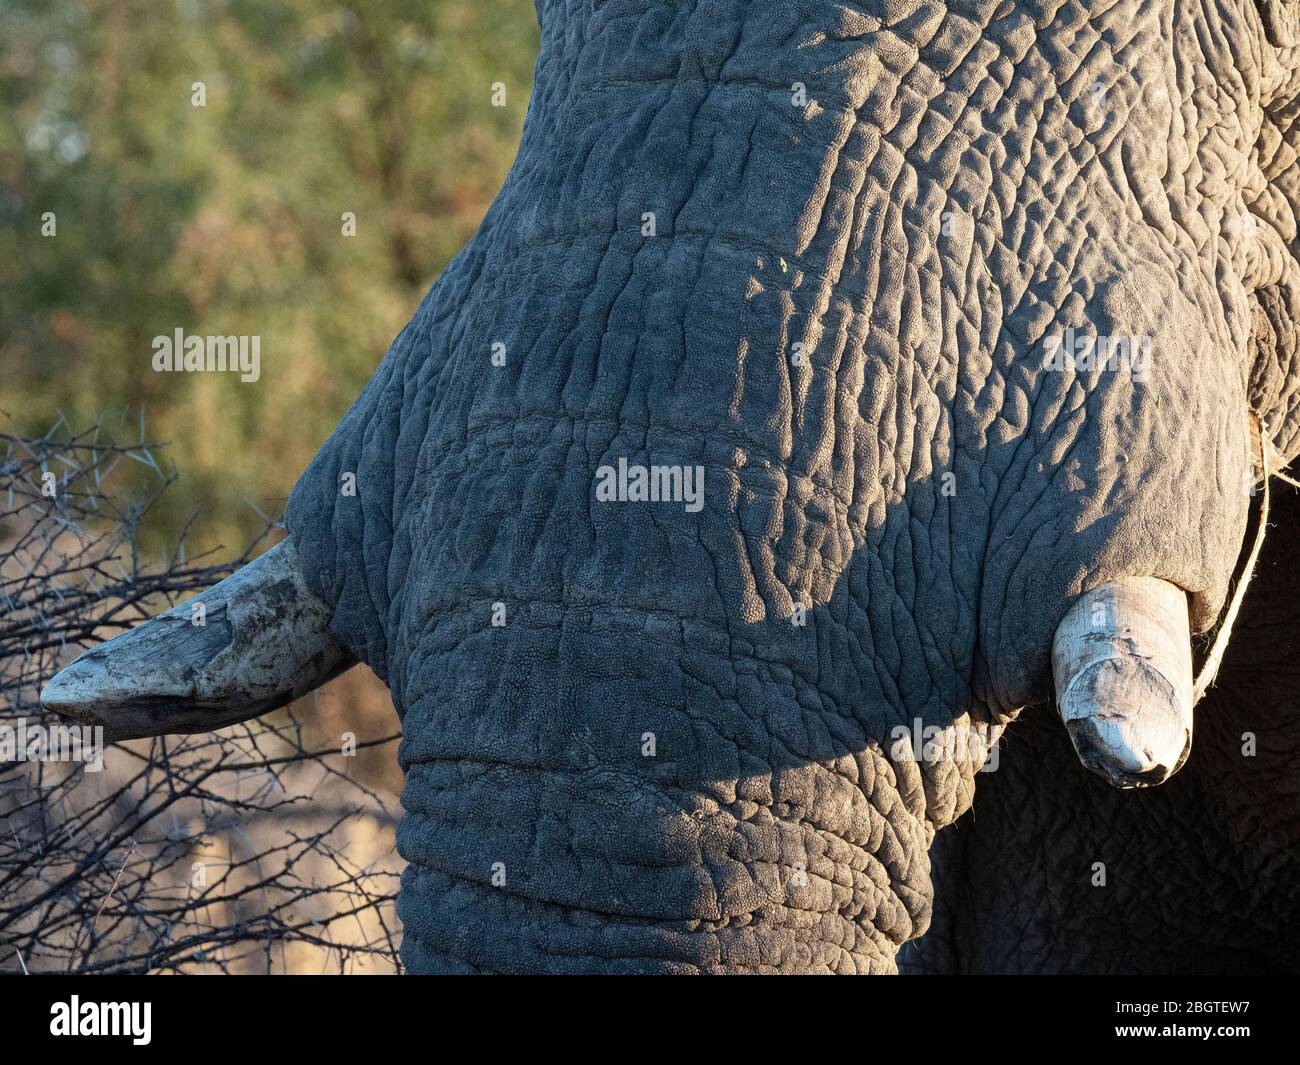 African Elephant, Loxodonta africana, Tusk Detail in Chobe National Park, Botswana, Südafrika. Stockfoto